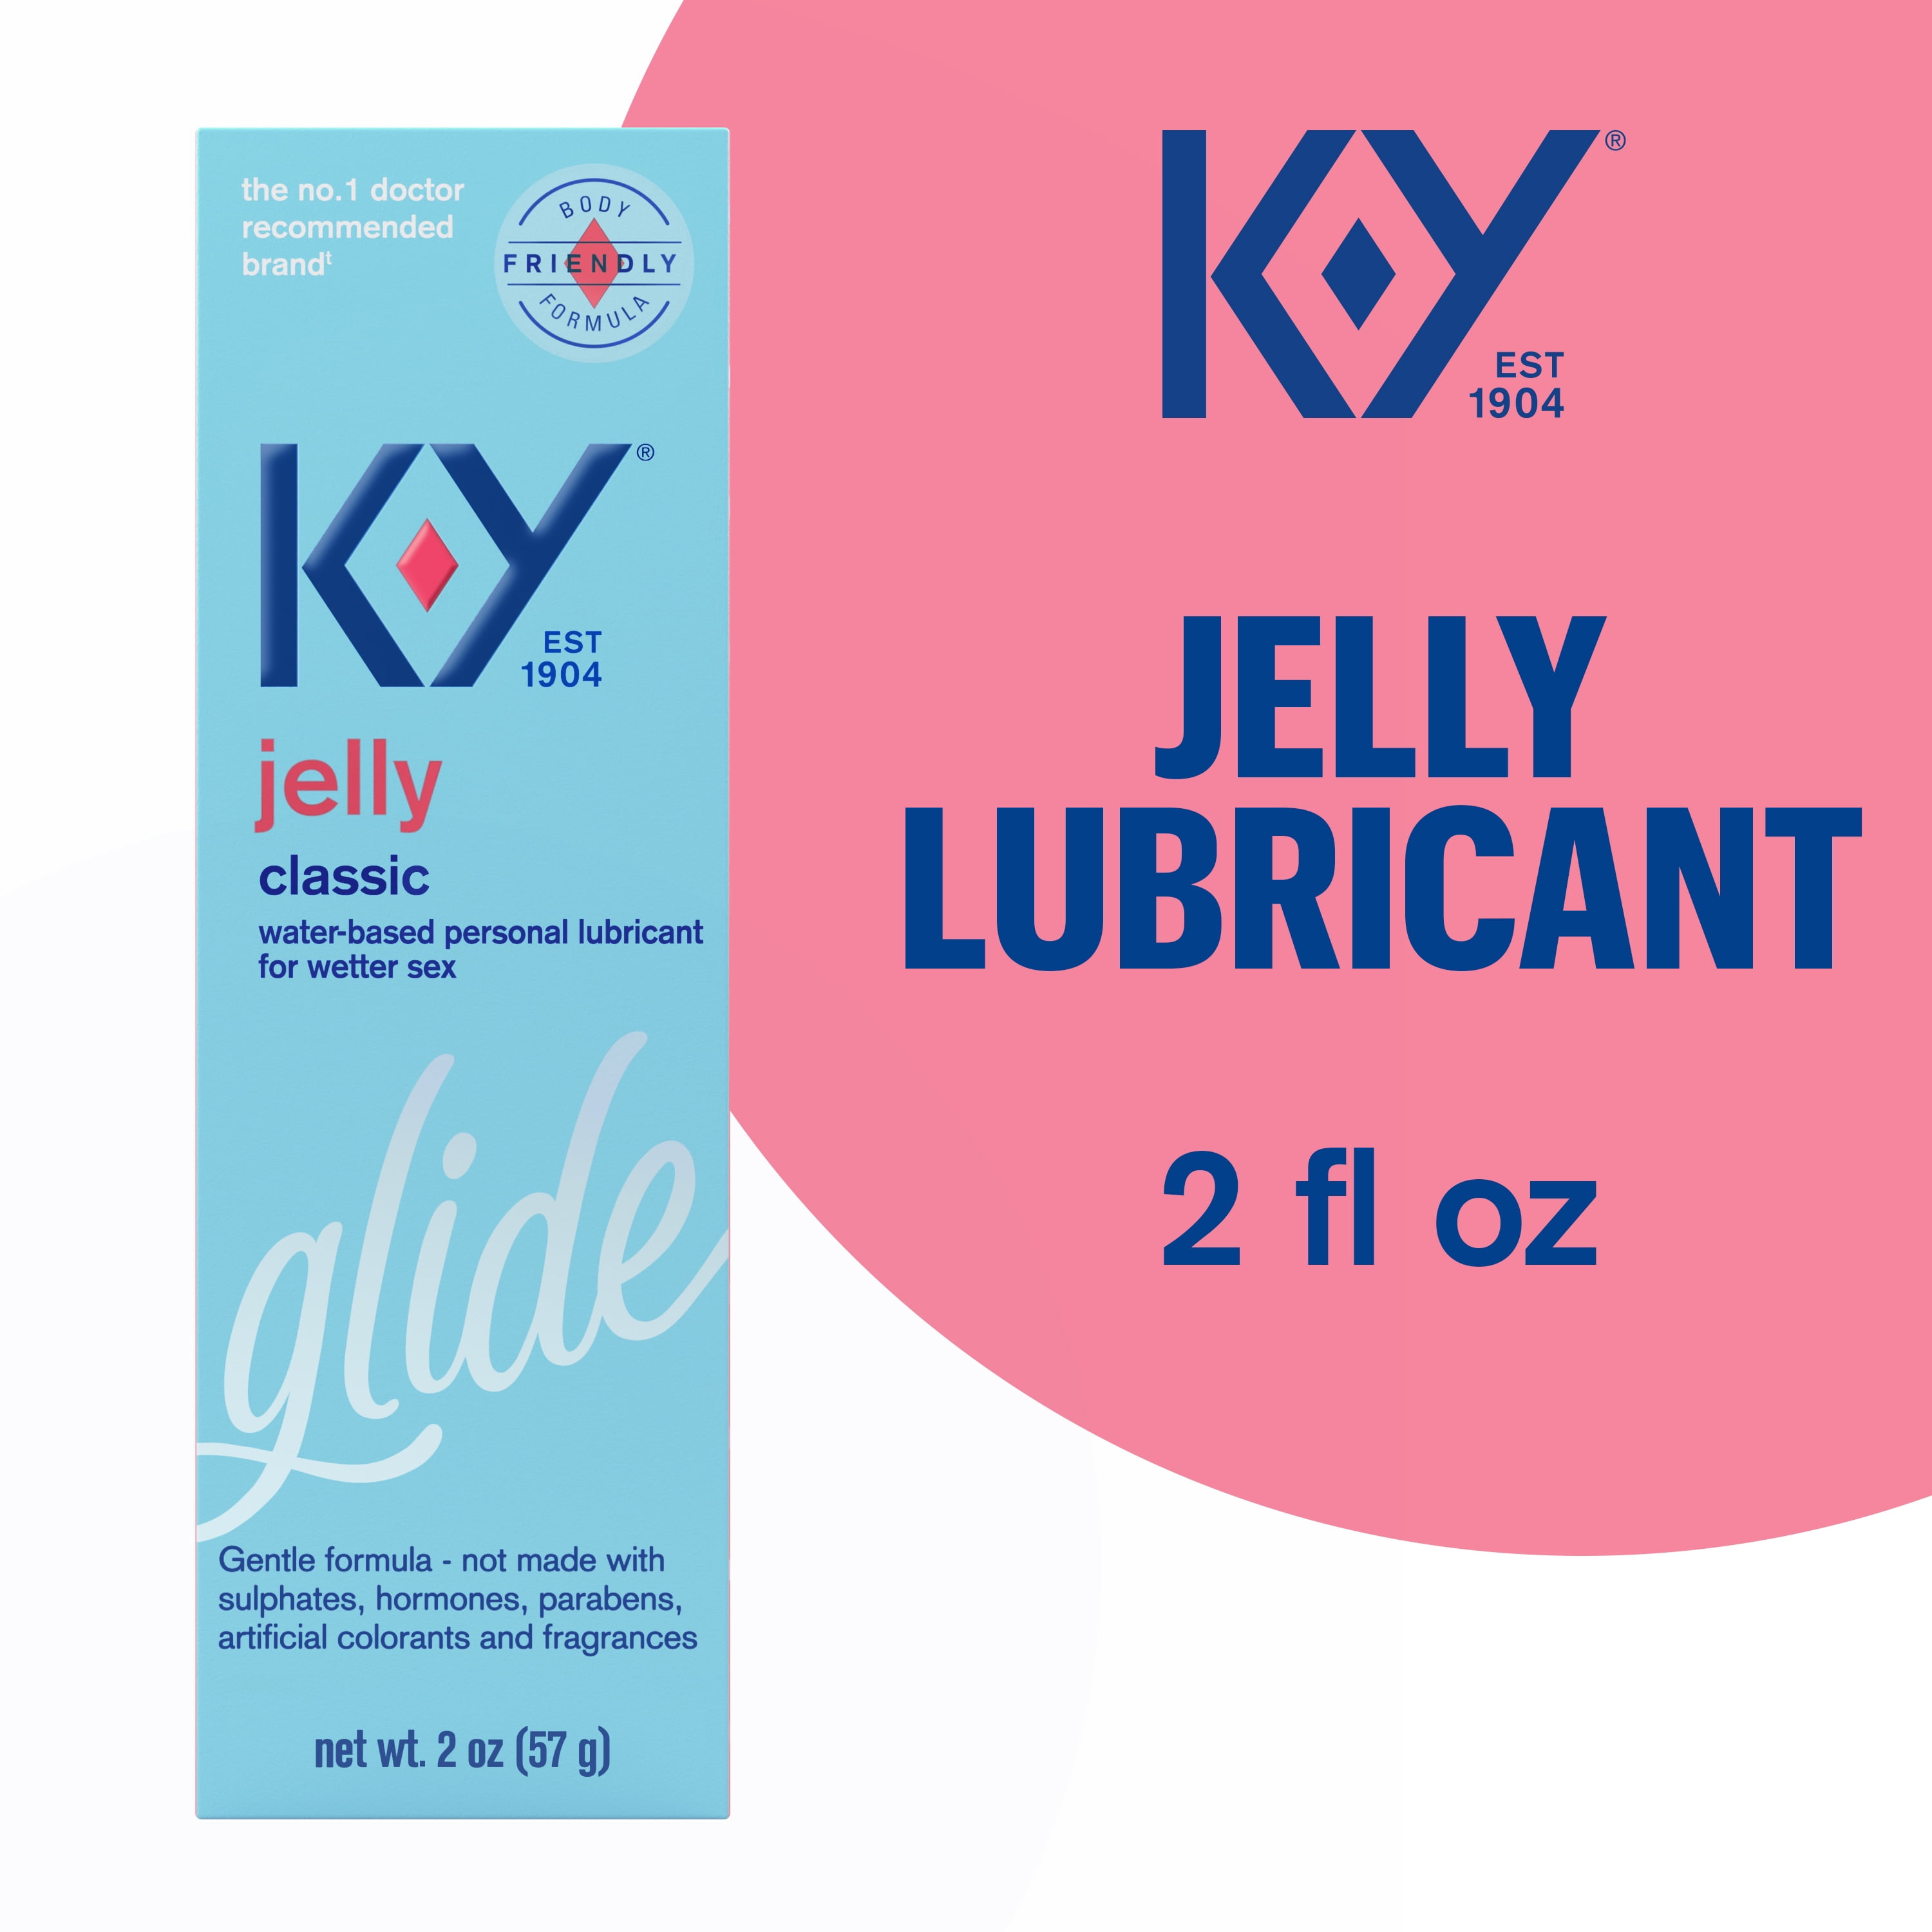 Ky jelly uses